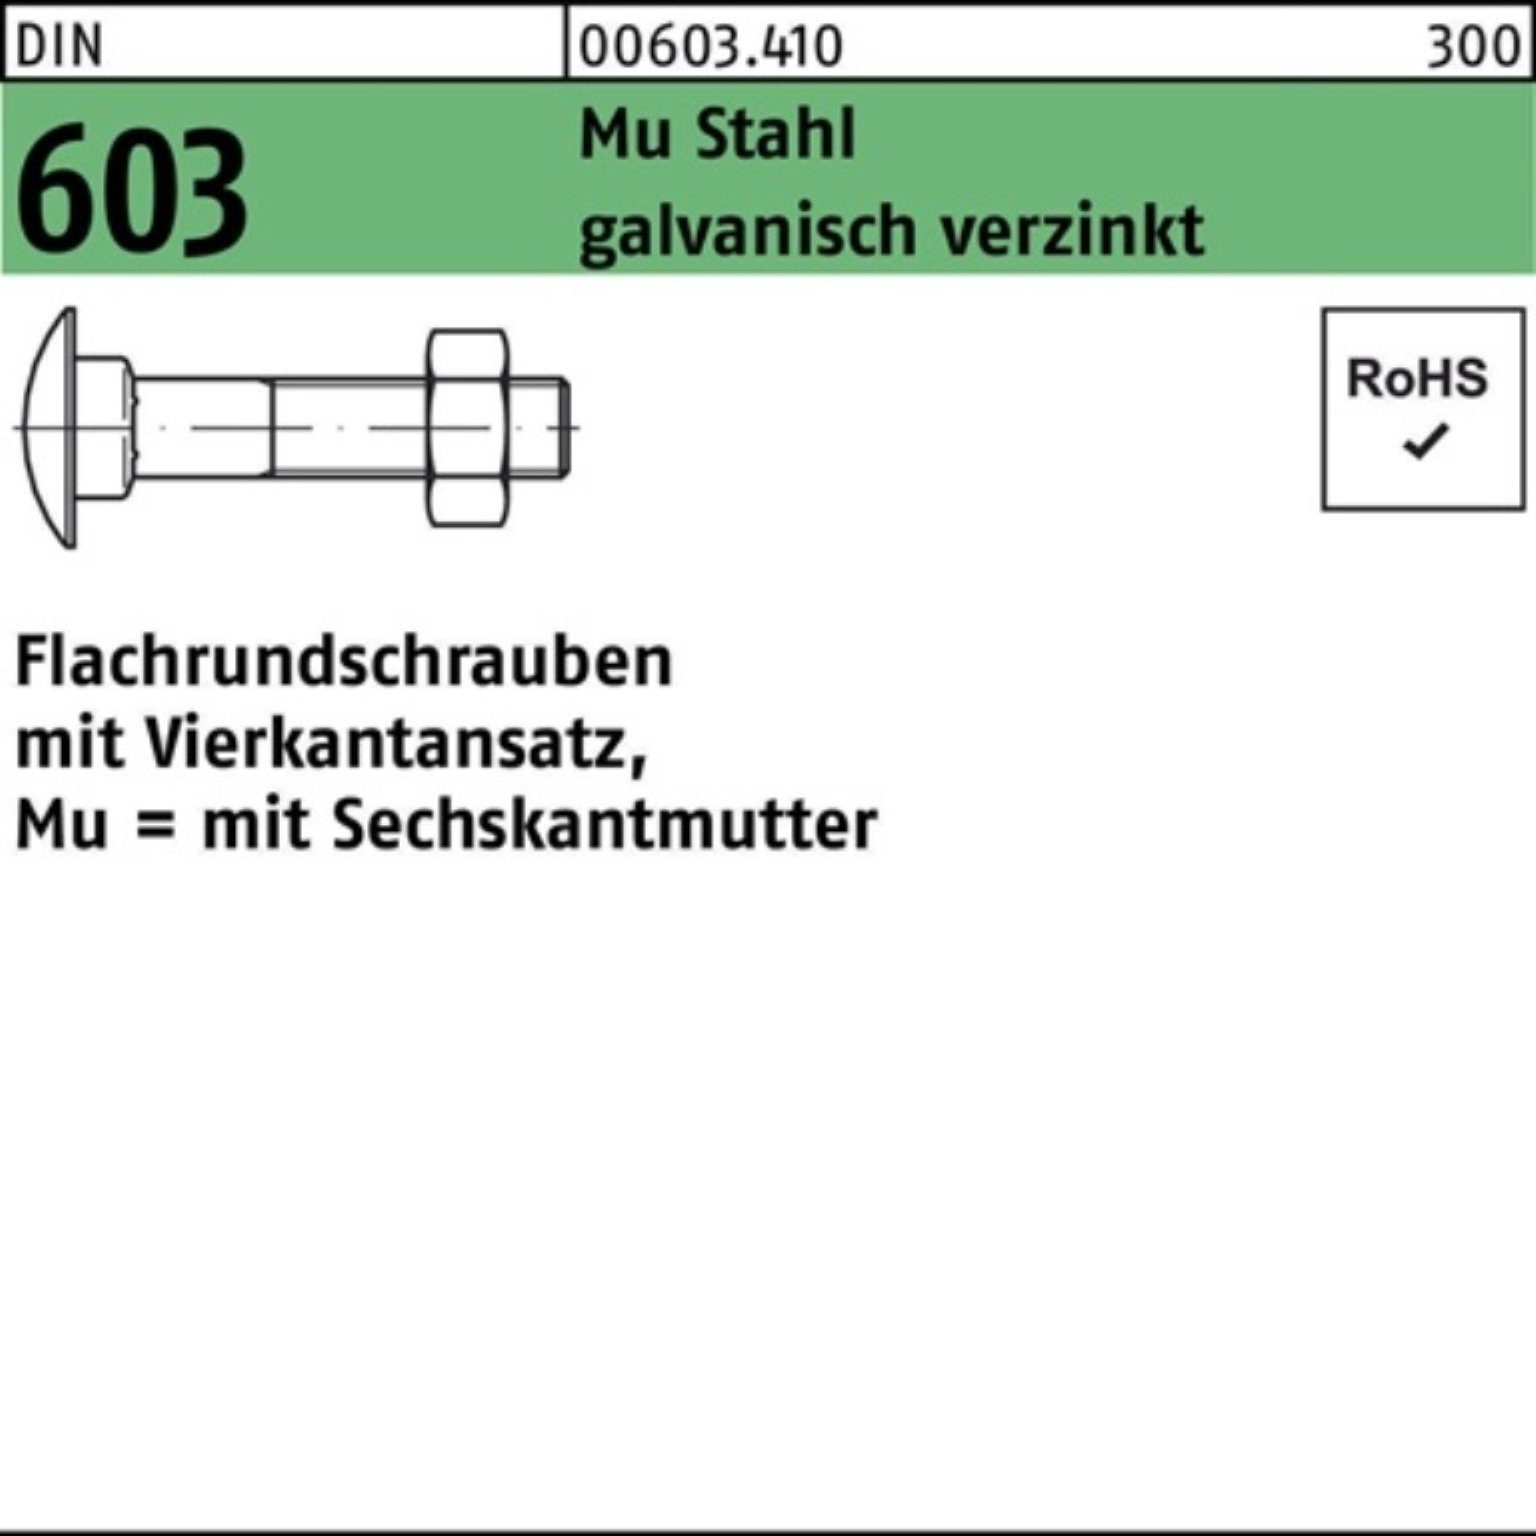 Reyher Vierkantansatz/6-ktmutter Schraube M6x50 M DIN 603 Pack 200er Flachrundschraube